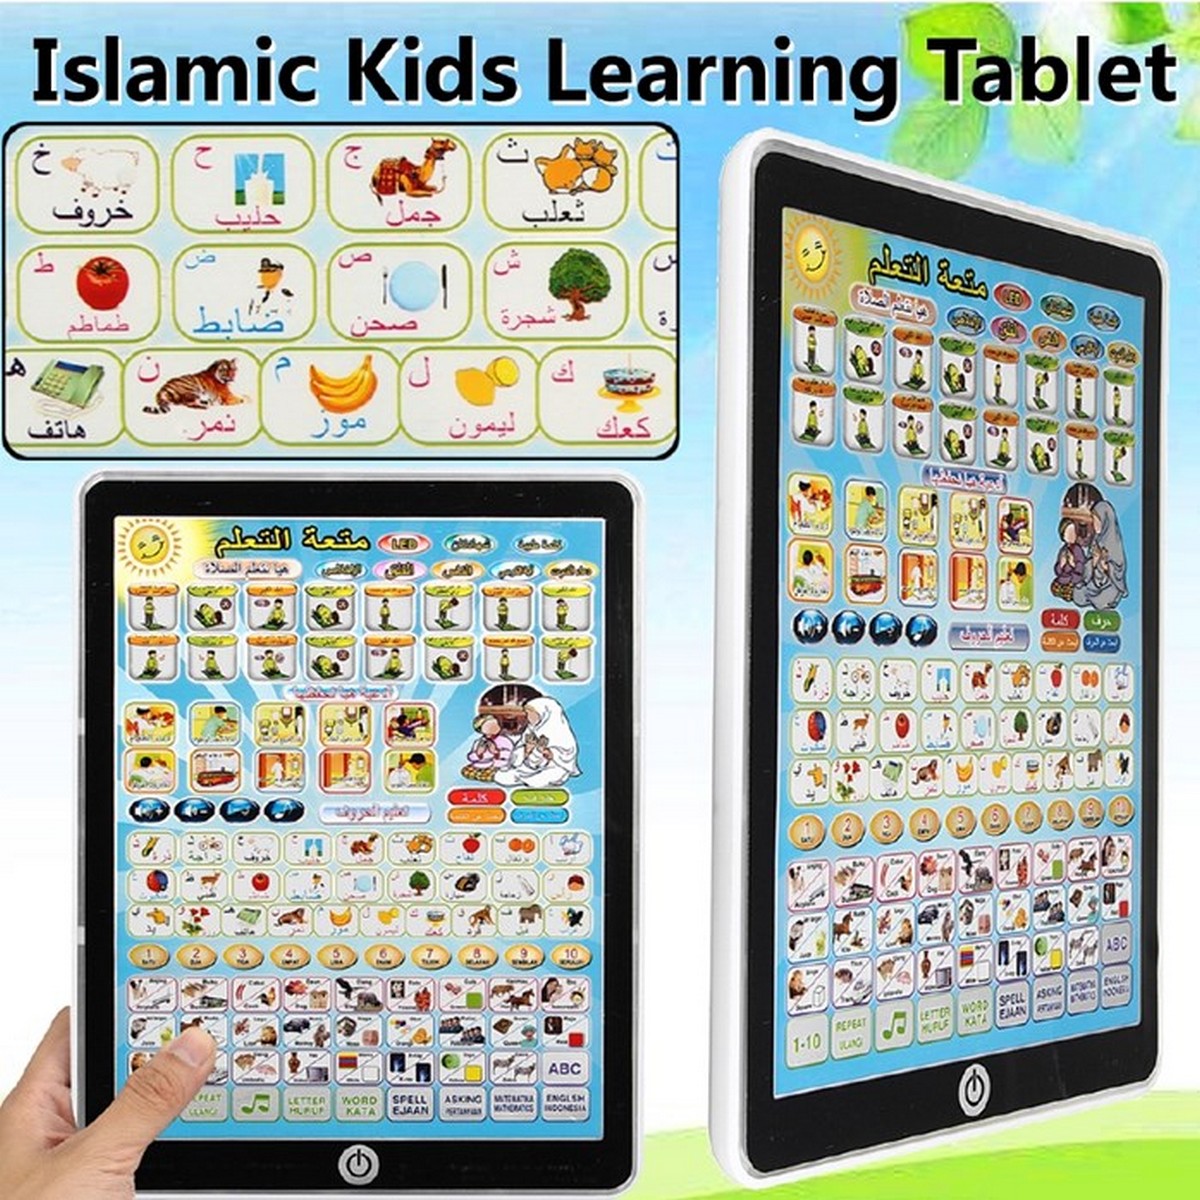 Islamic Tab for kids